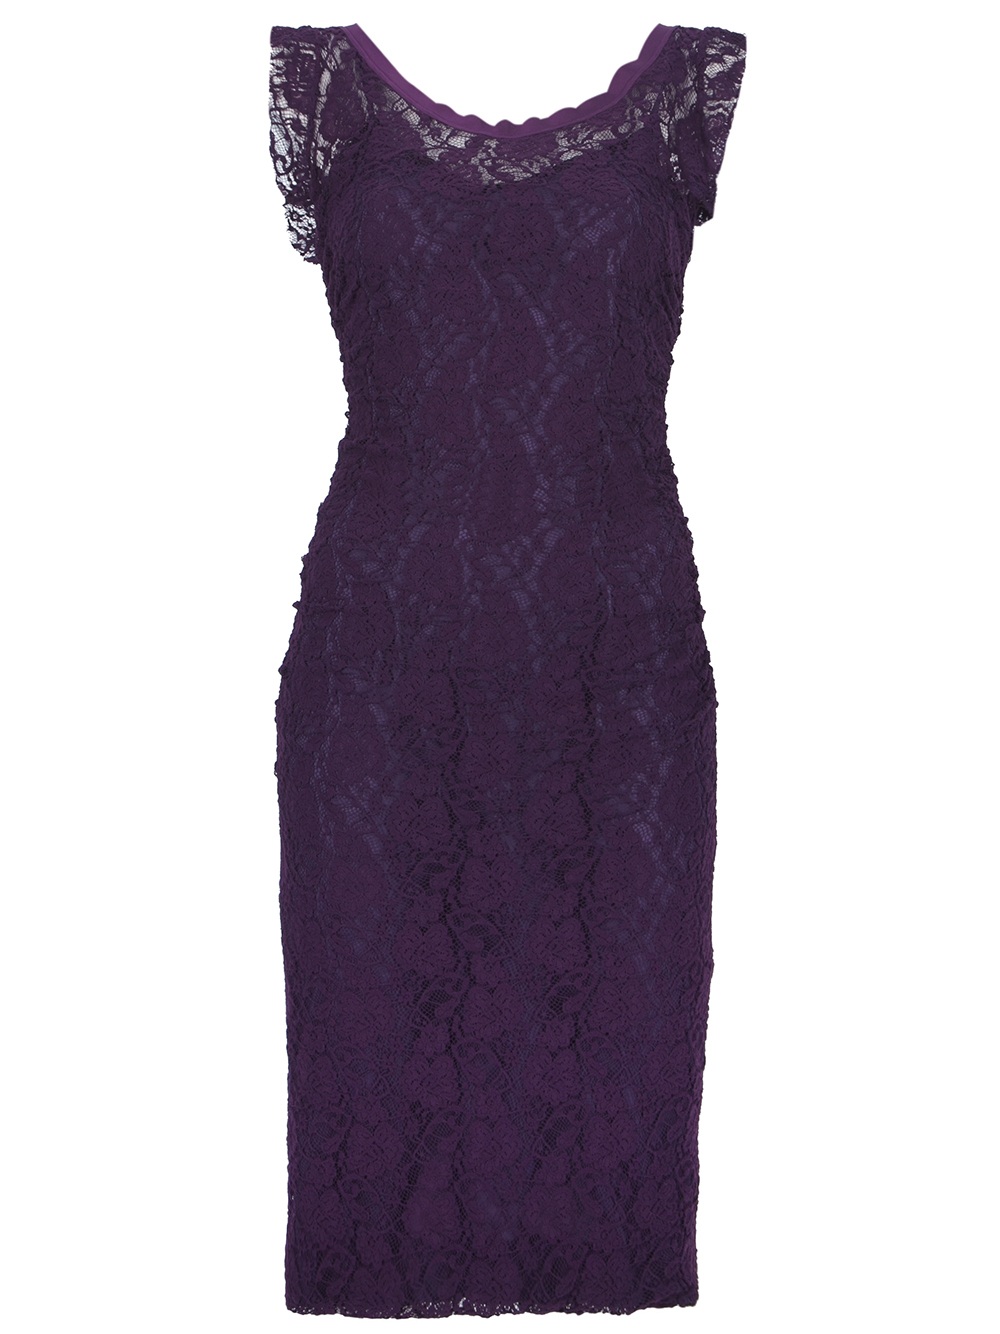 Dolce & gabbana V-Back Lace Dress in Purple | Lyst